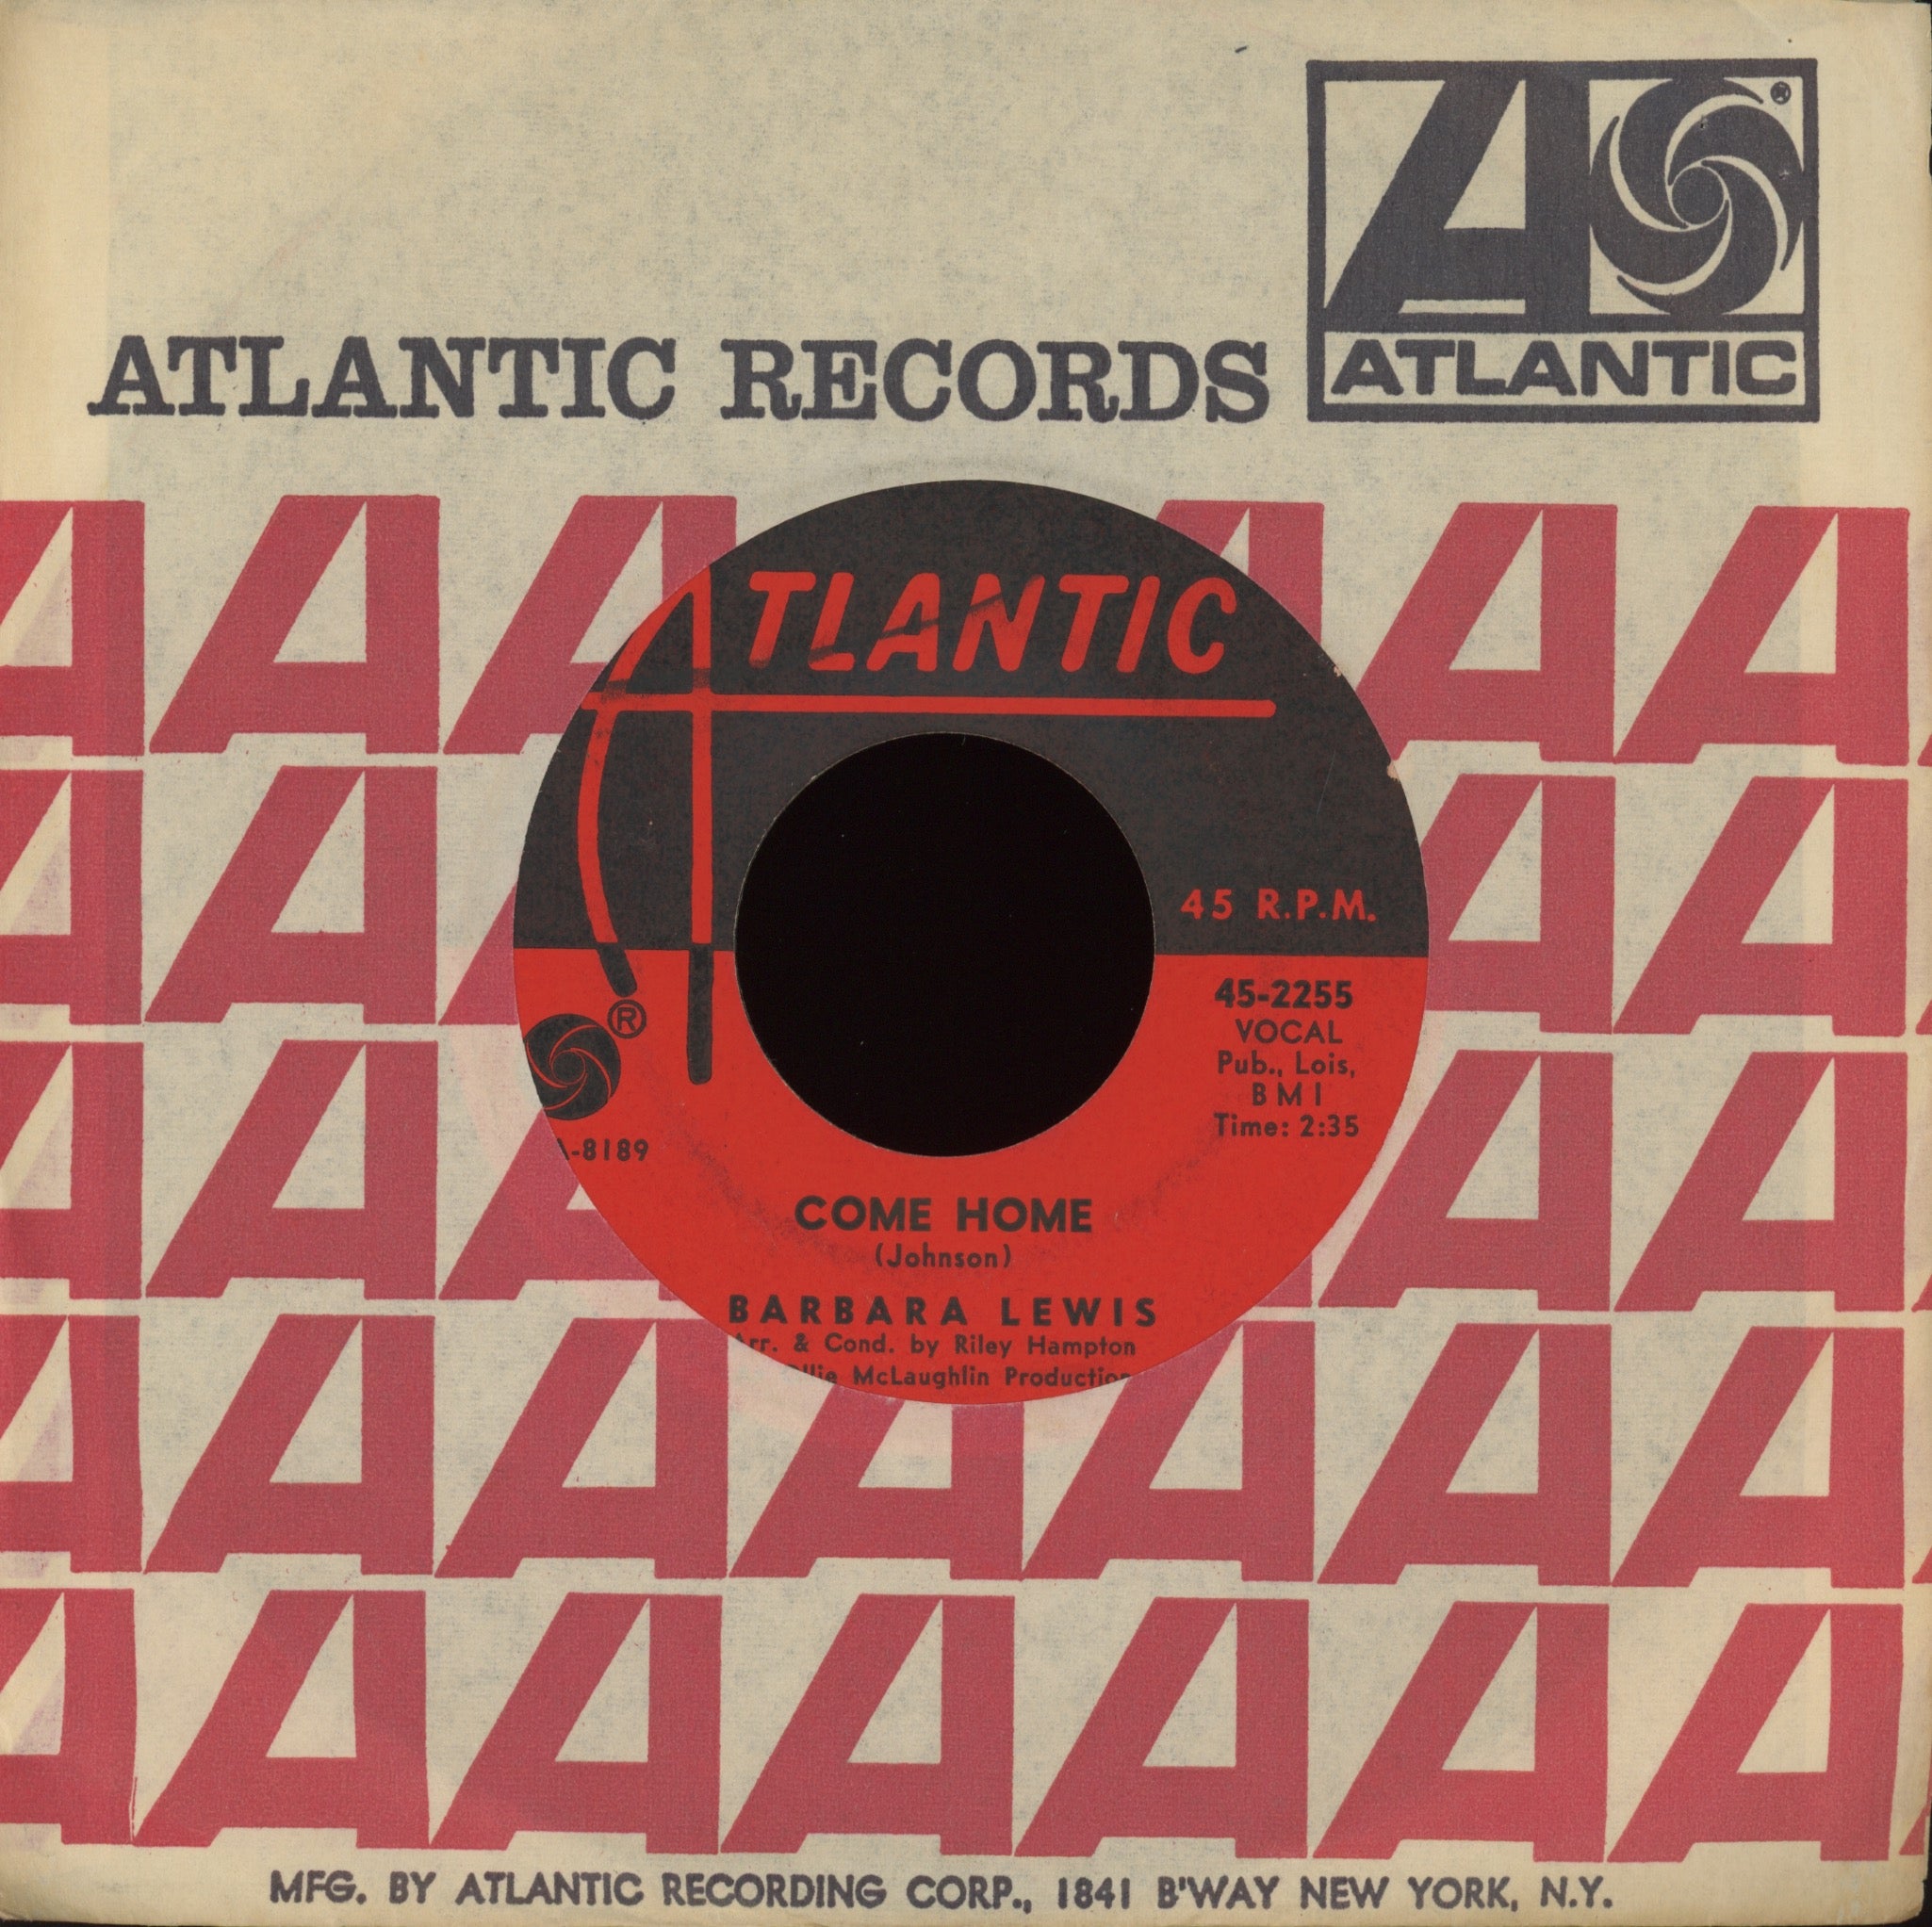 Barbara Lewis - Pushin' A Good Thing Too Far on Atlantic Northern Soul 45